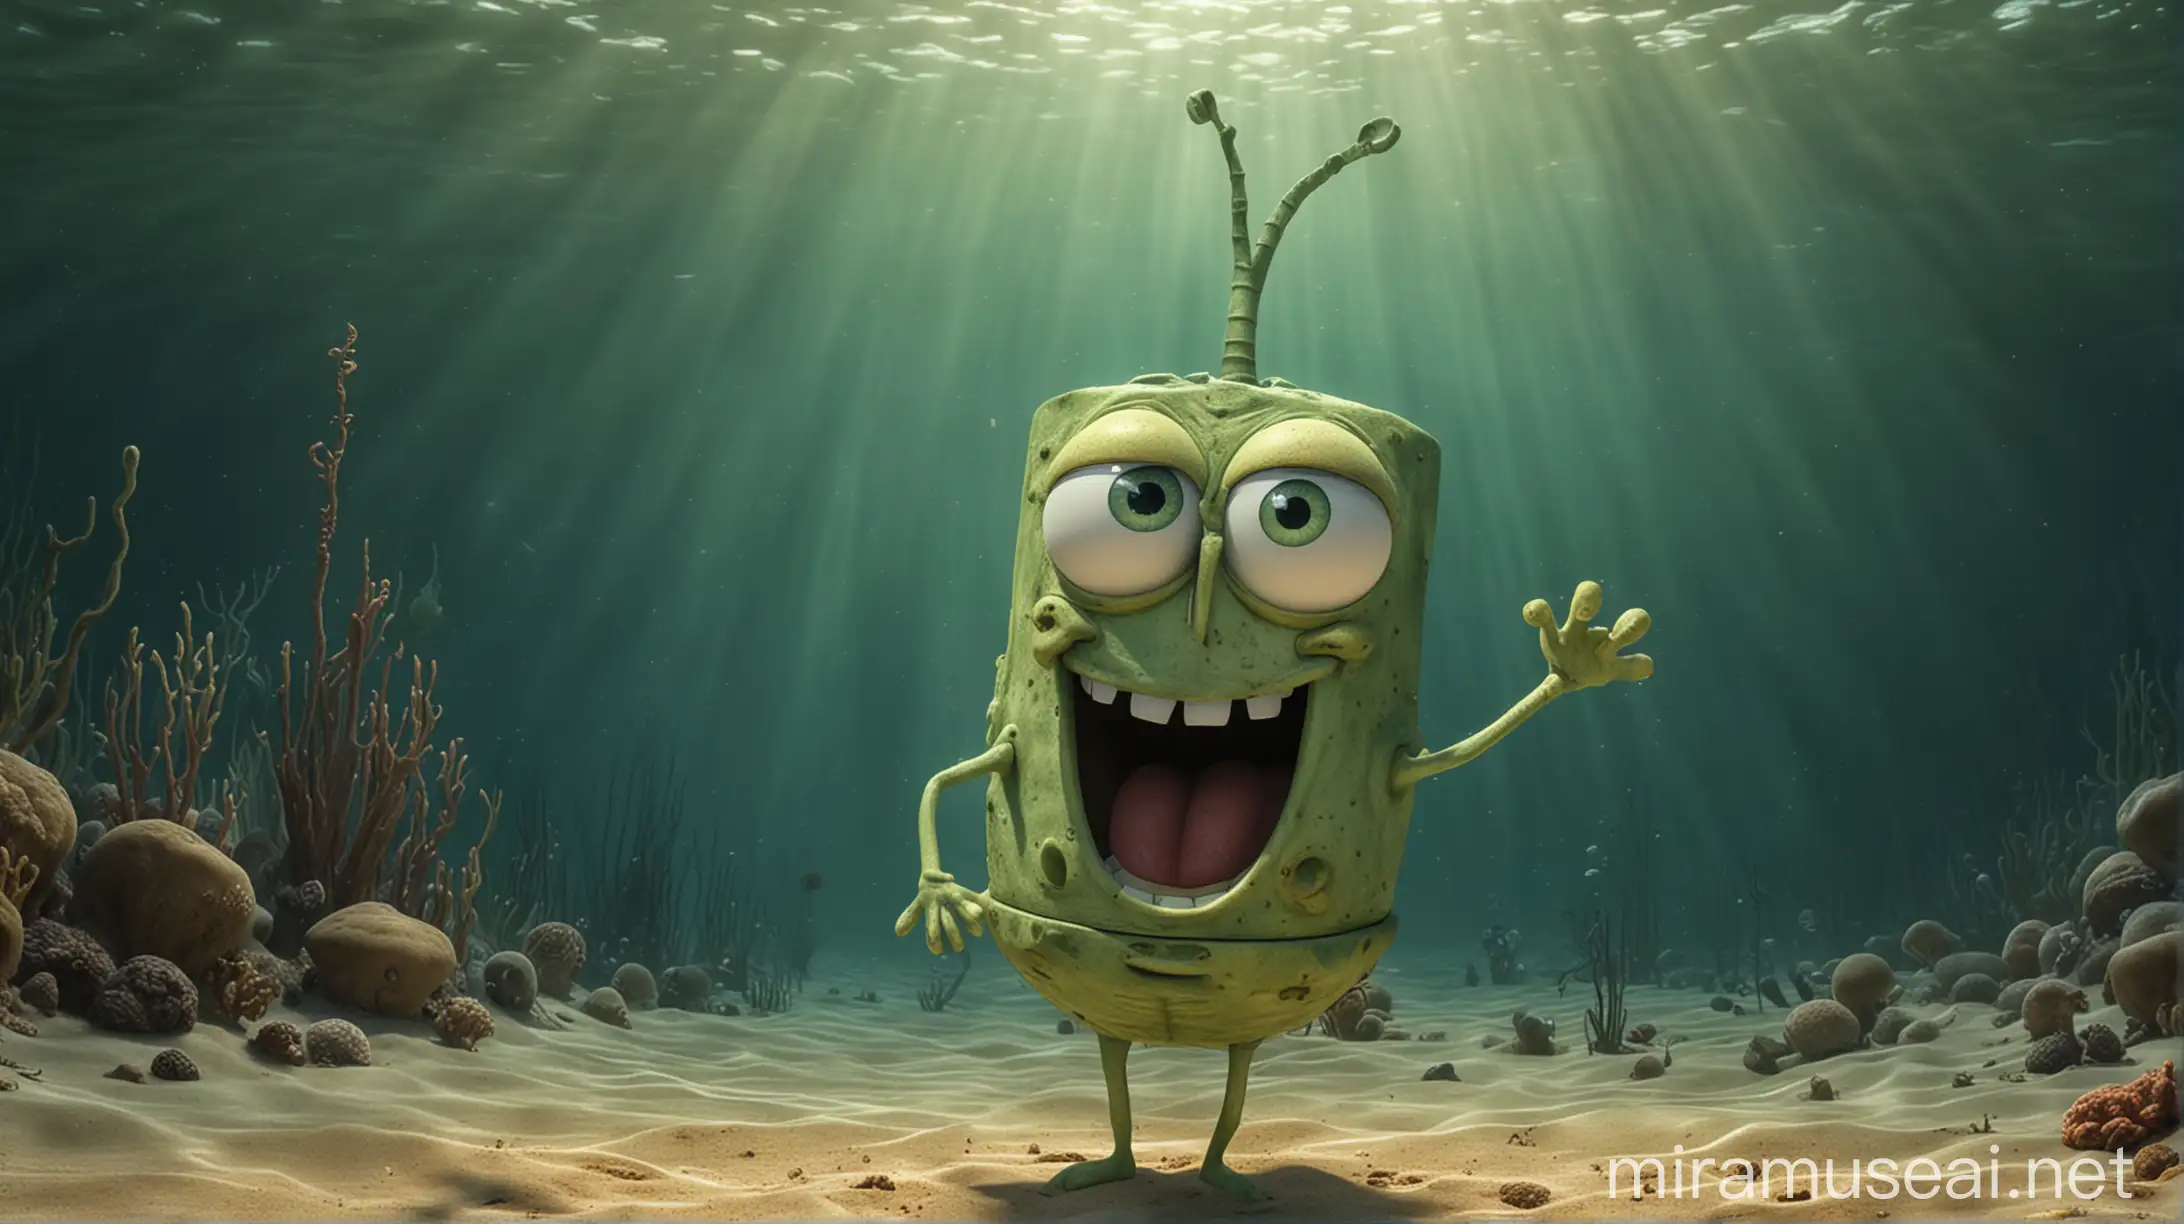 karikatur 4D plankton dari spongebob squarepant, background bikini bottom
